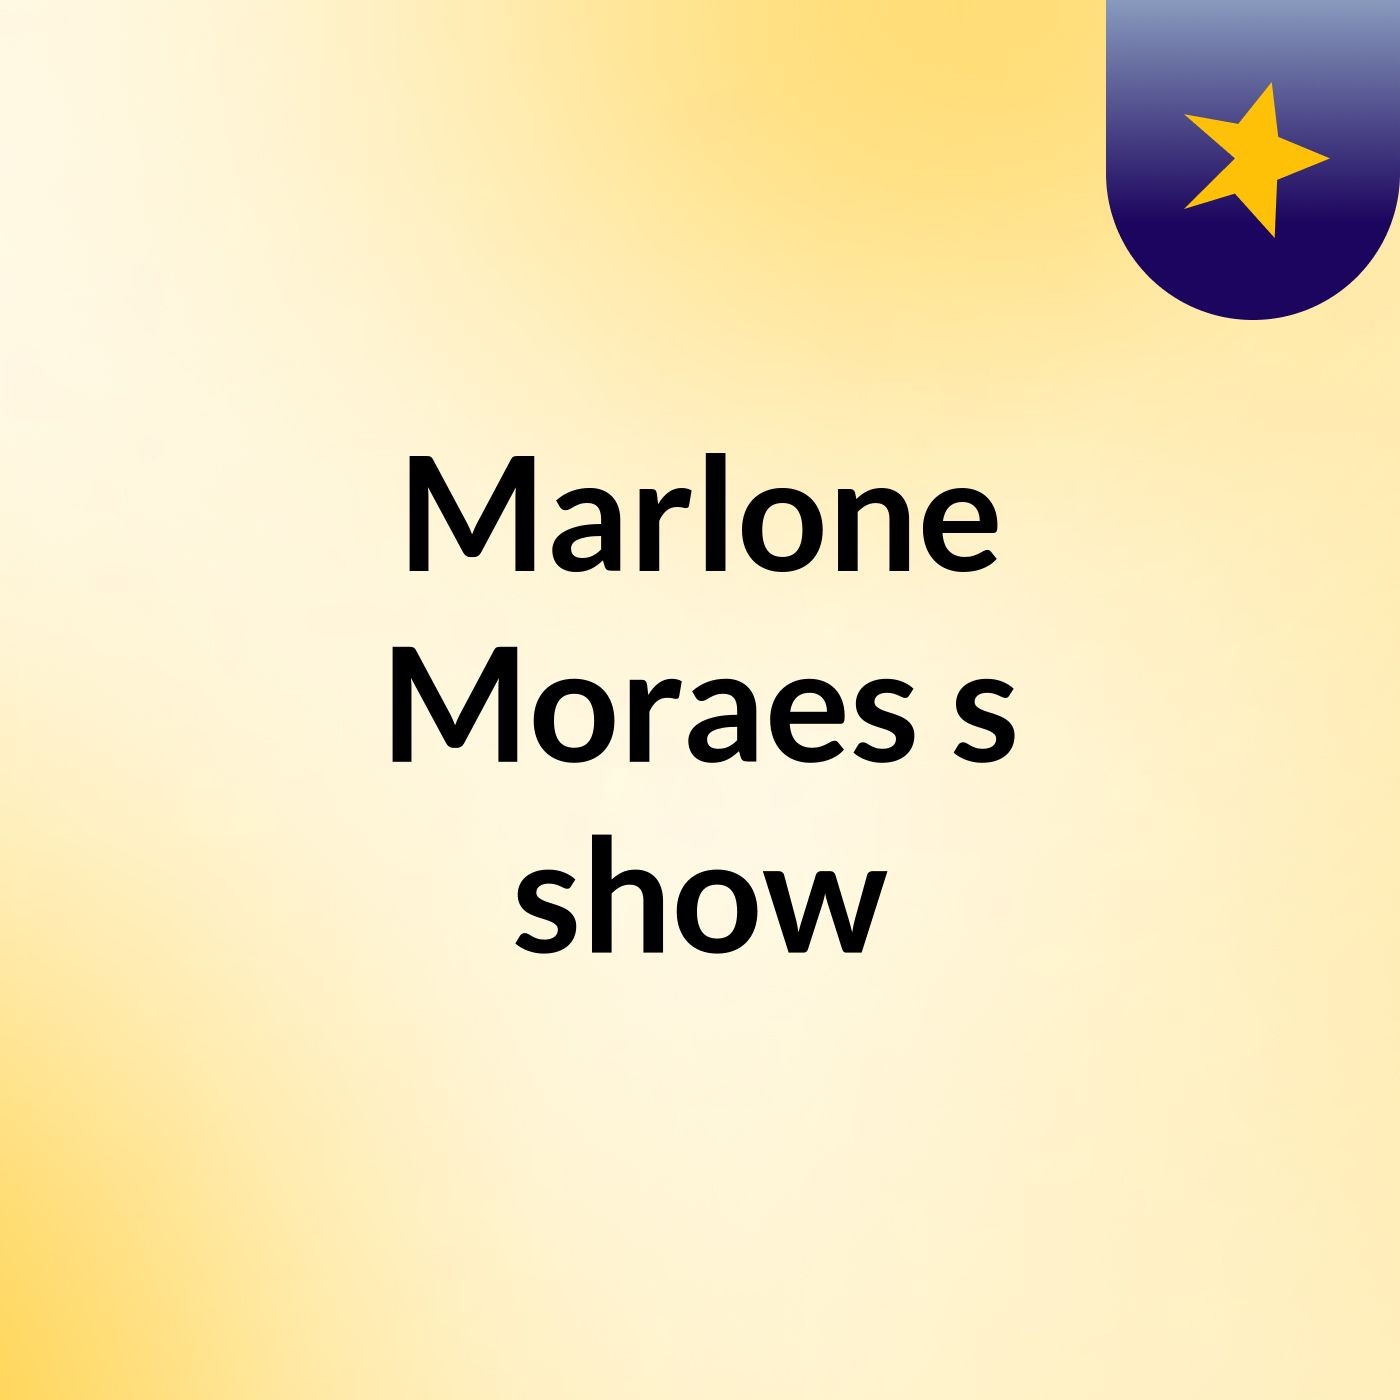 Marlone Moraes's show